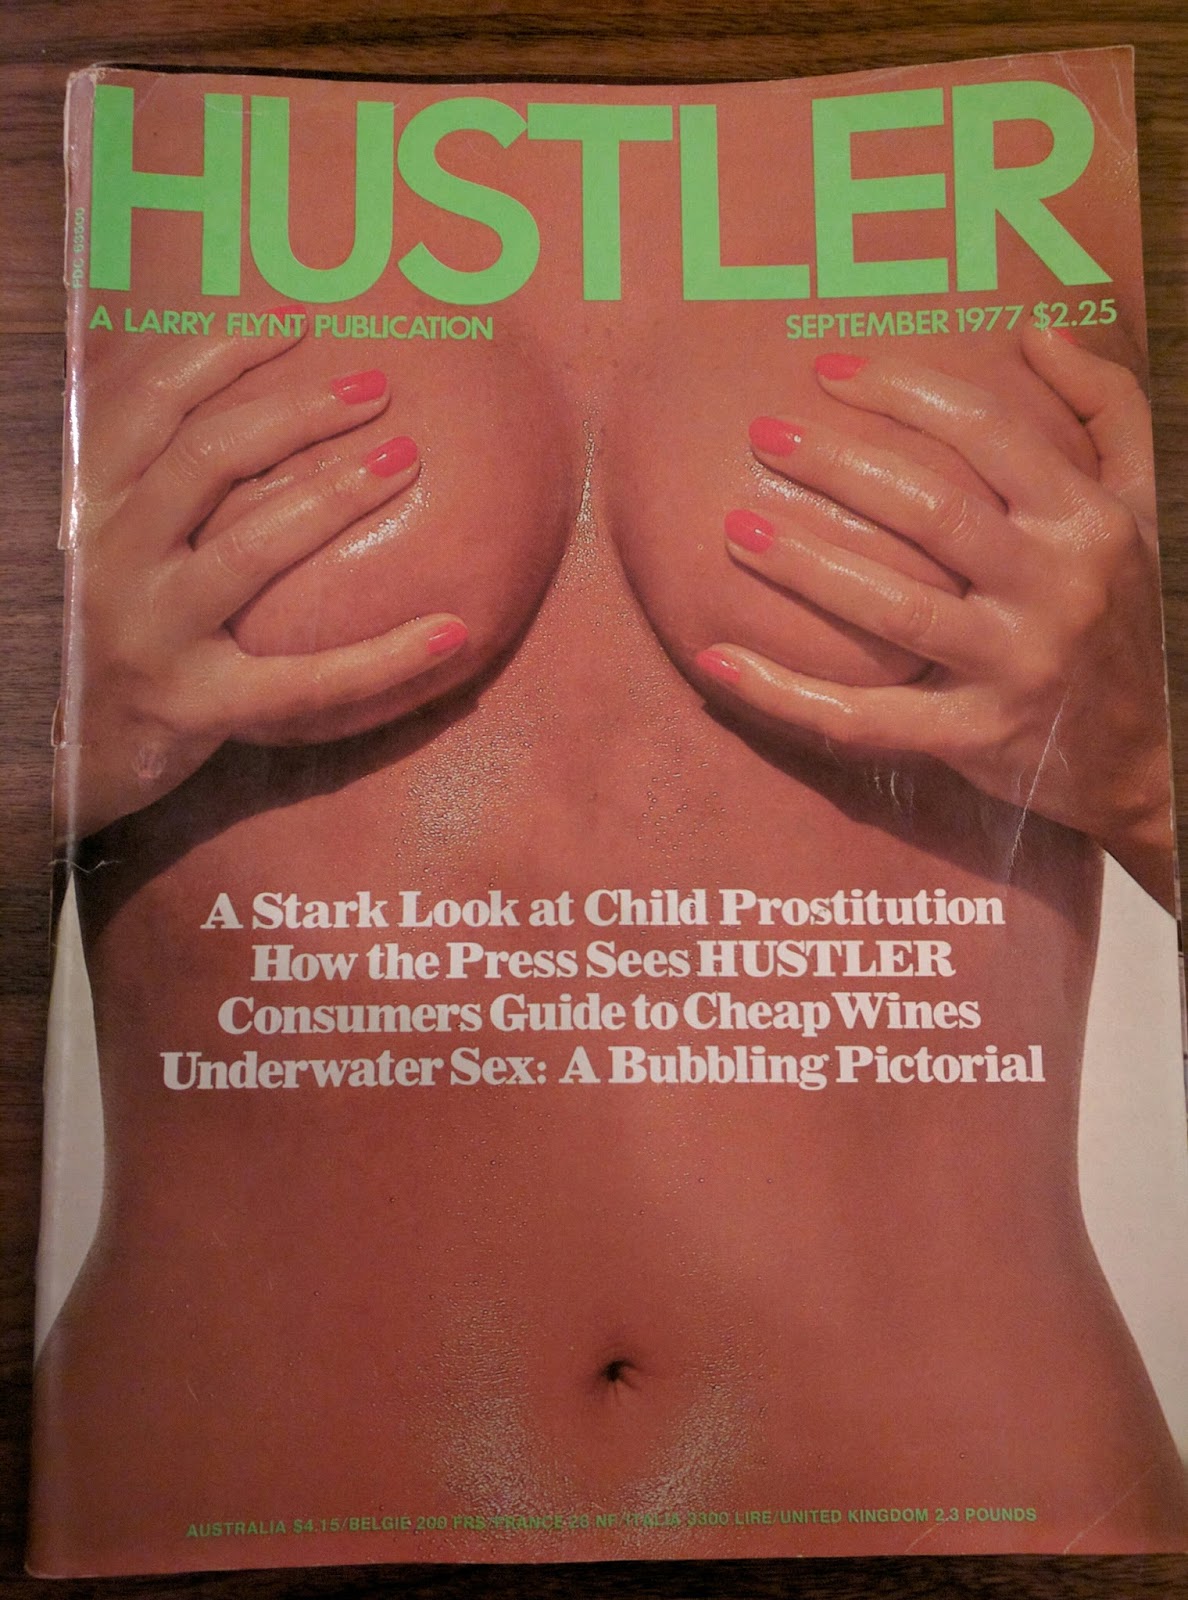 SSL: 1977 Hustler Review Series #2: X Rated Reviews